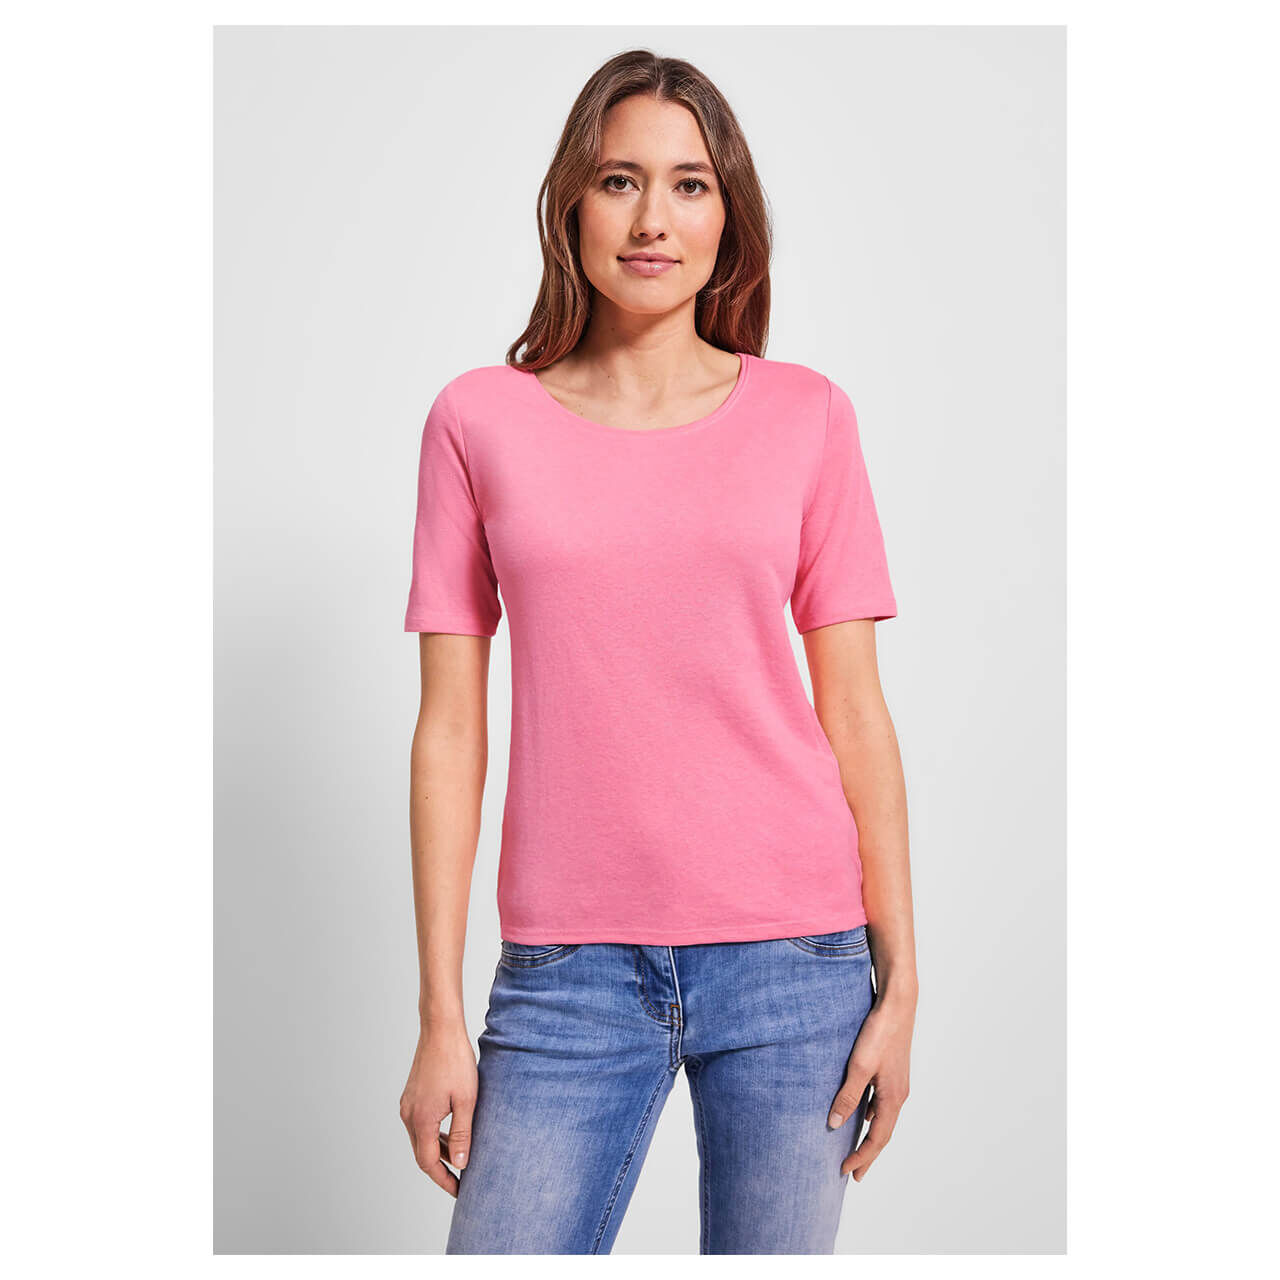 Cecil Lena T-Shirt soft pink